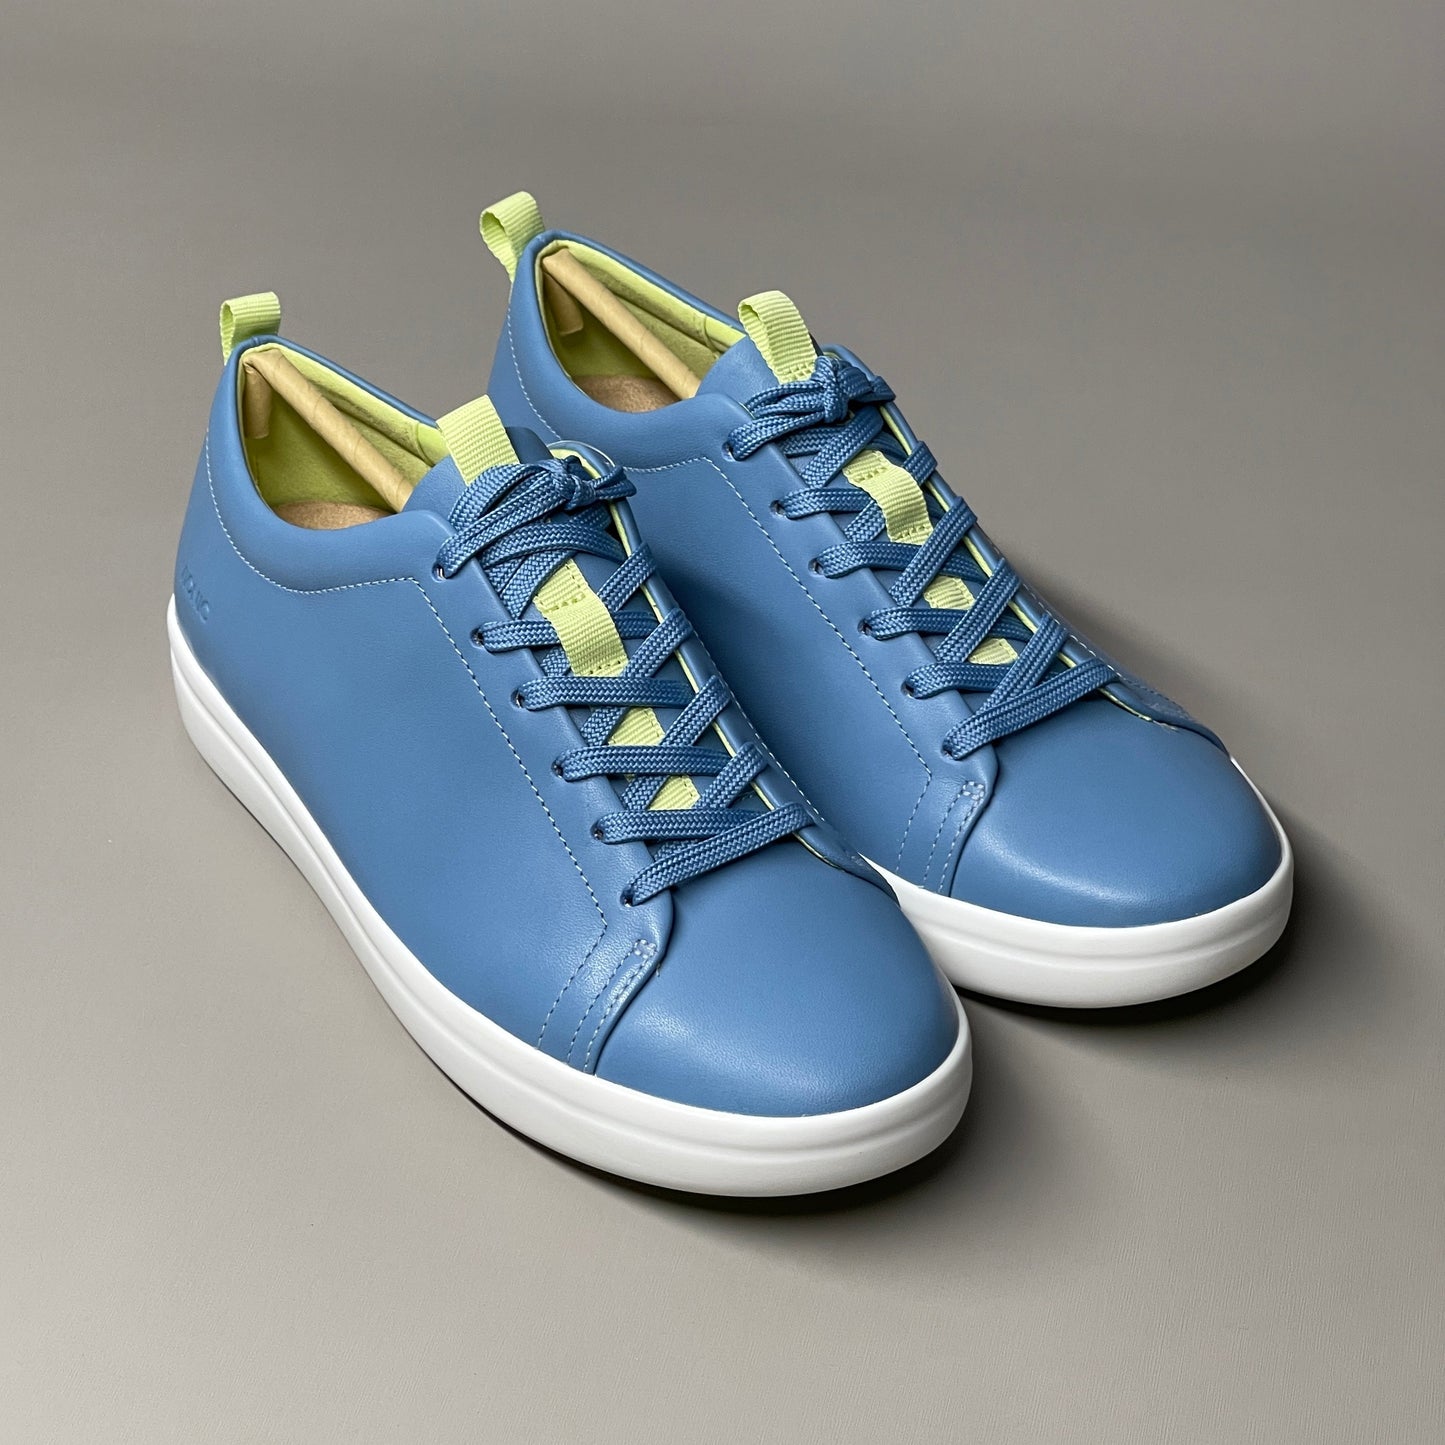 VIONIC Paisley Leather Shoe Women's SZ 6 Sky Blue (New)